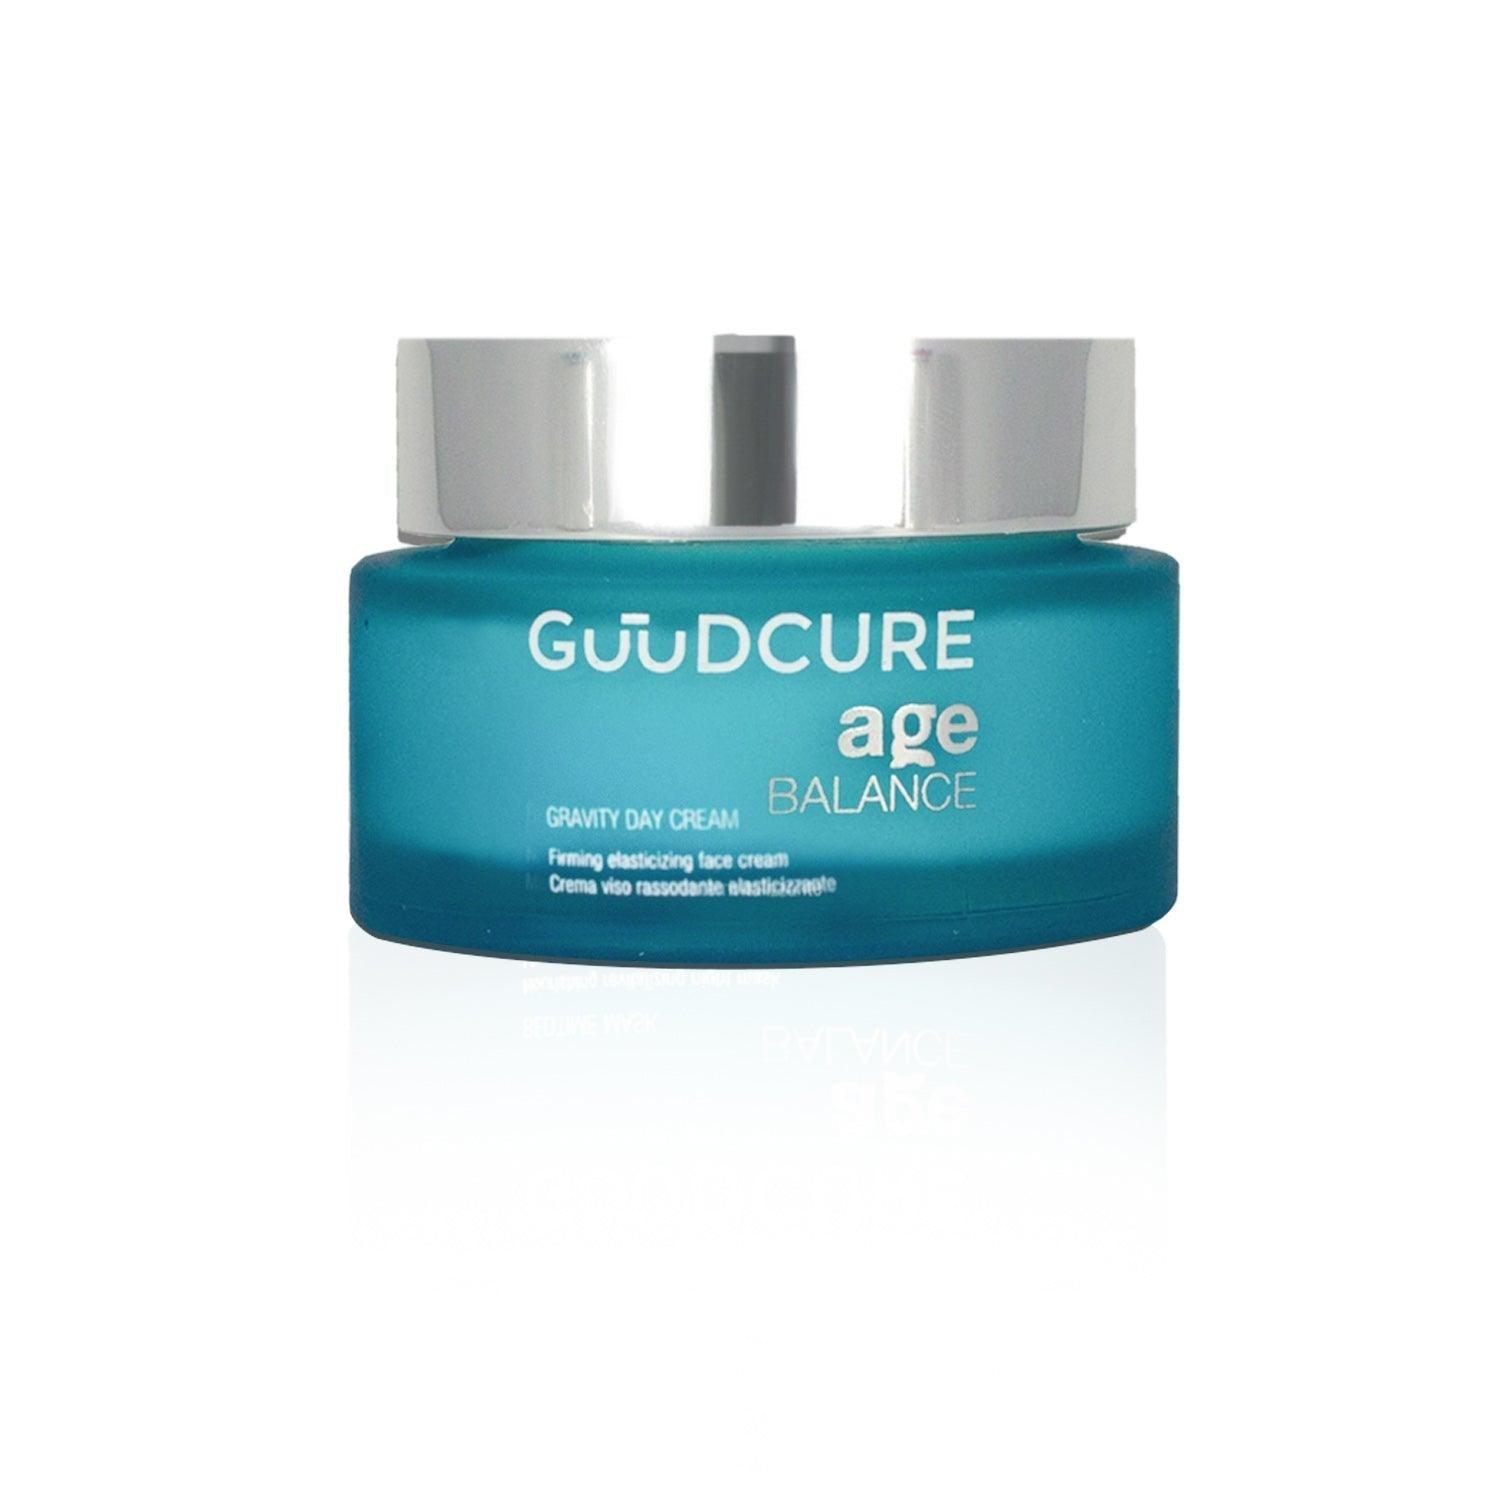 Guudcure Age Balance Gravity Day Cream 50 ml - Mrayti Store